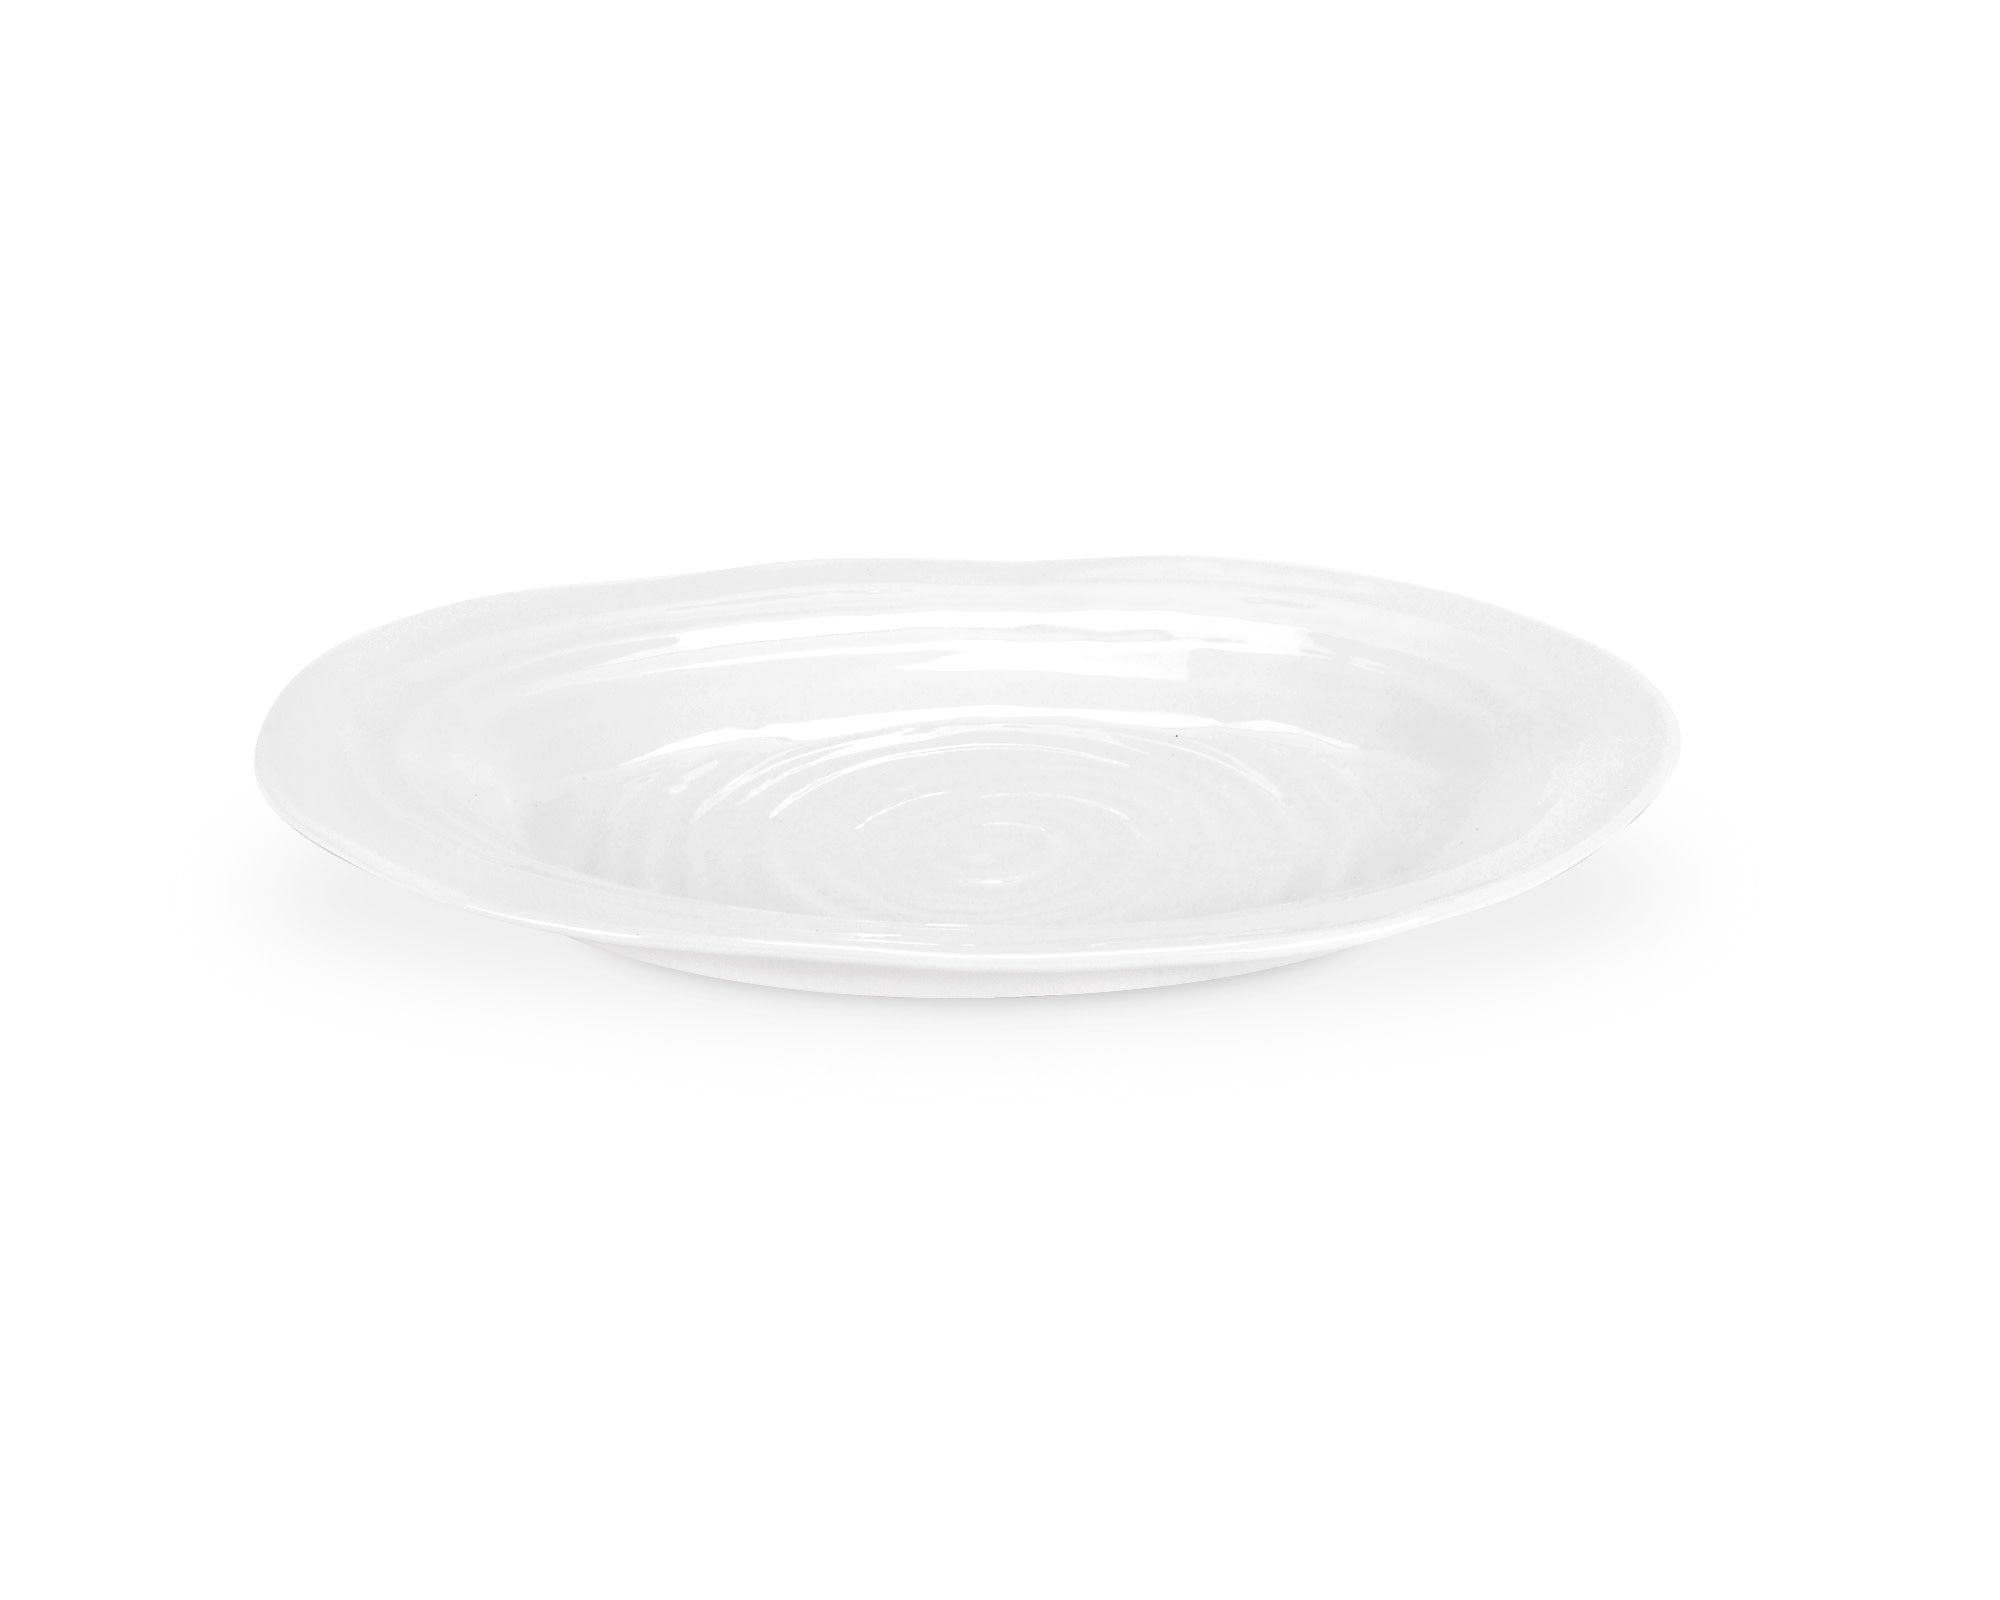 Maison Lipari Sophie Conran White Small Oval Platter 11.50"  PORTMEIRION.